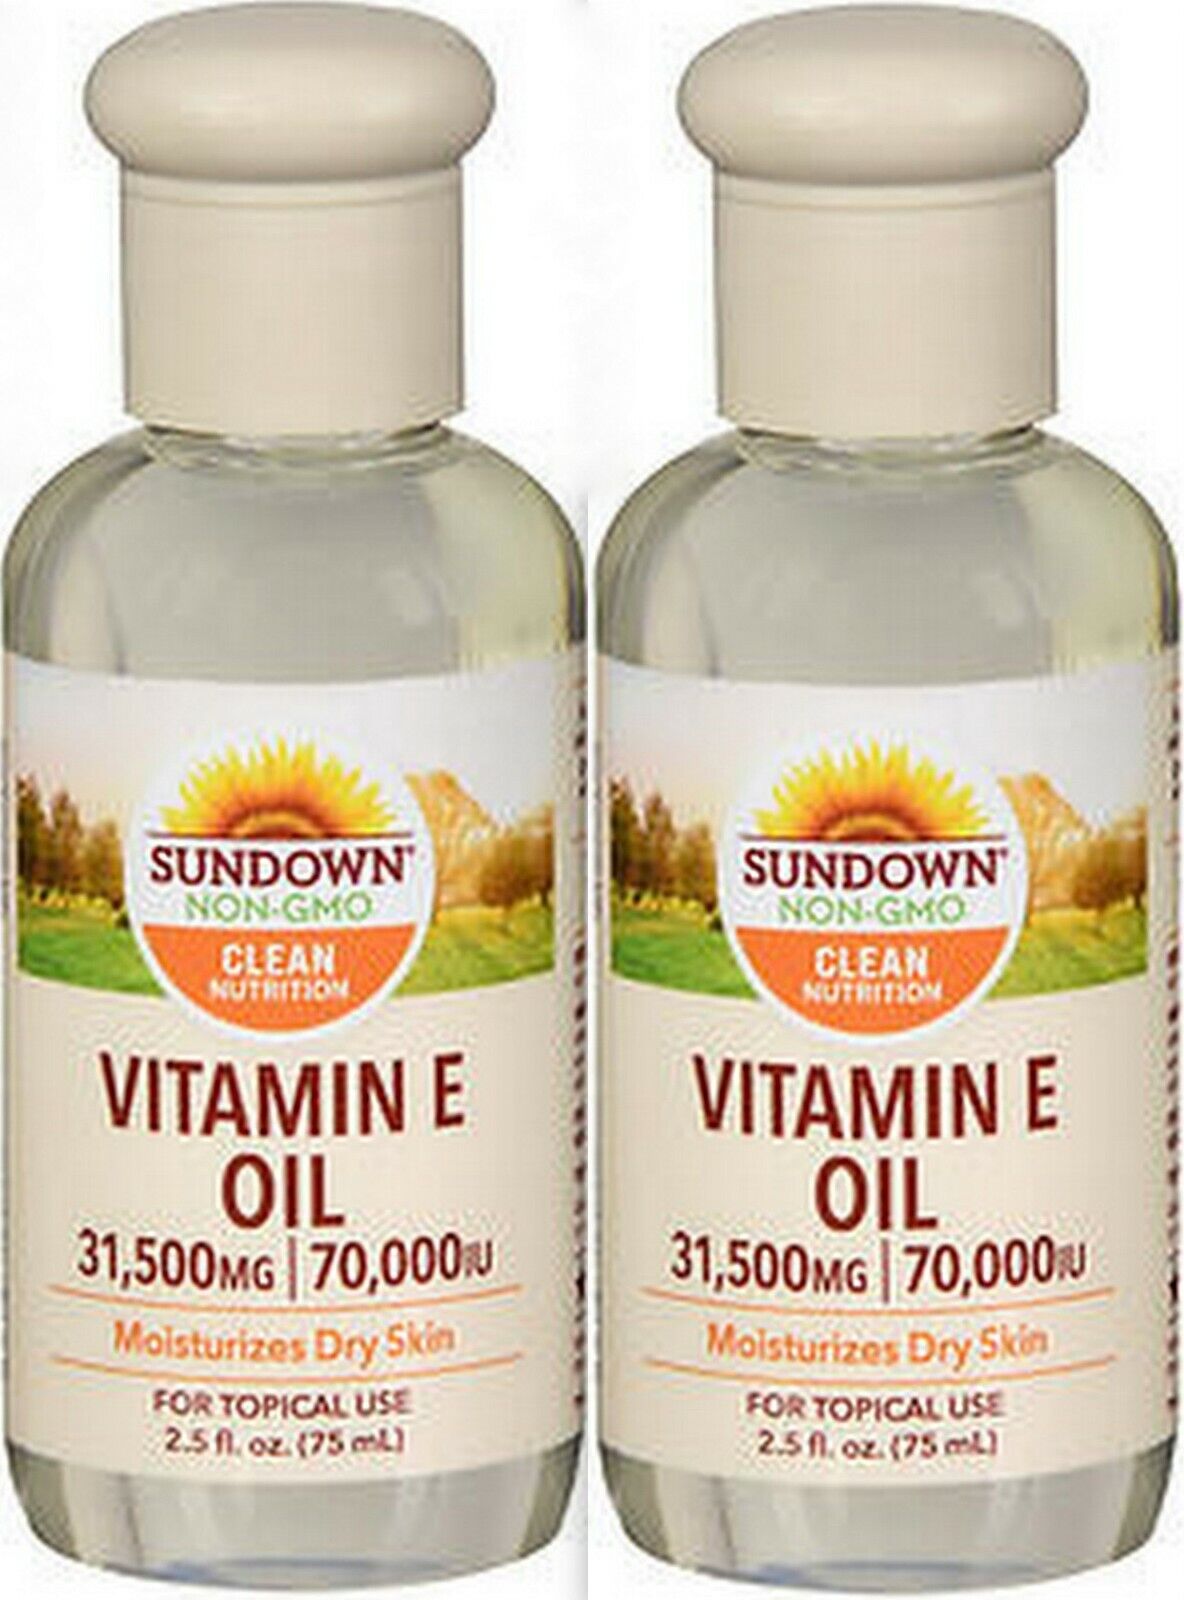 Sundown Pure Vitamin E Oil 70000iu 2.5oz ( 2 bottles ) PHARMACY FRESH! 